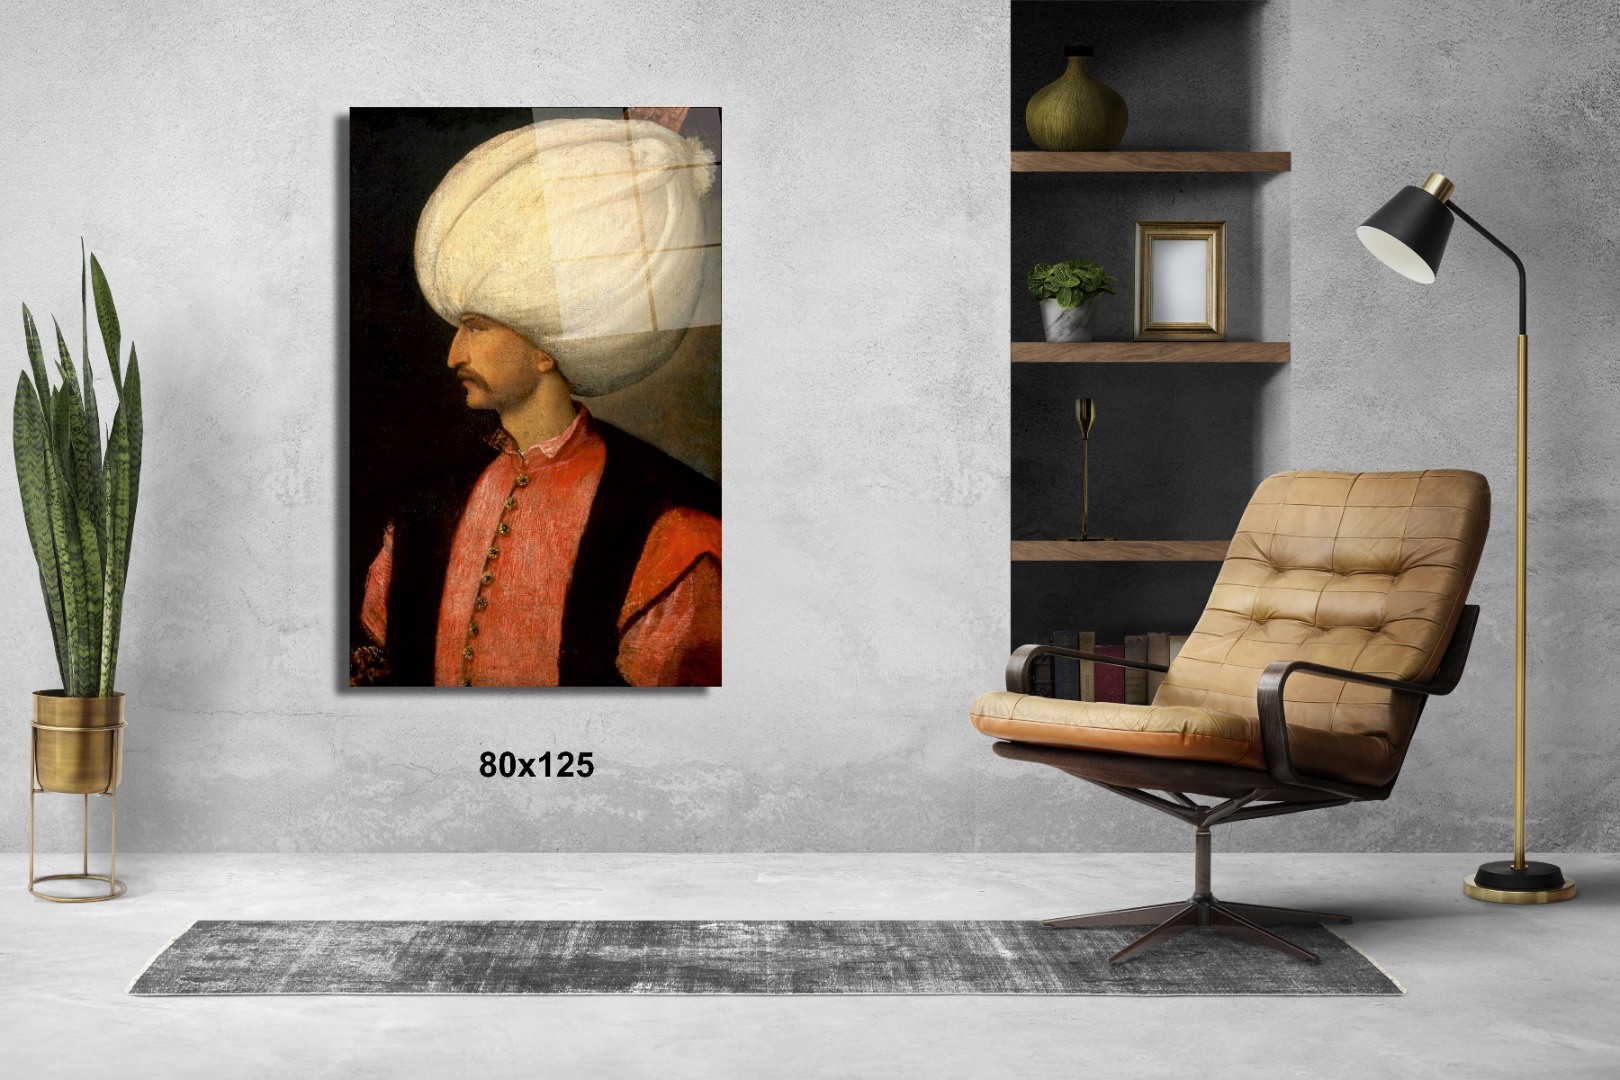 Osmanlı Padişahı Kanuni Sultan Süleyman Arşiv Cam Tablo #PCT0486